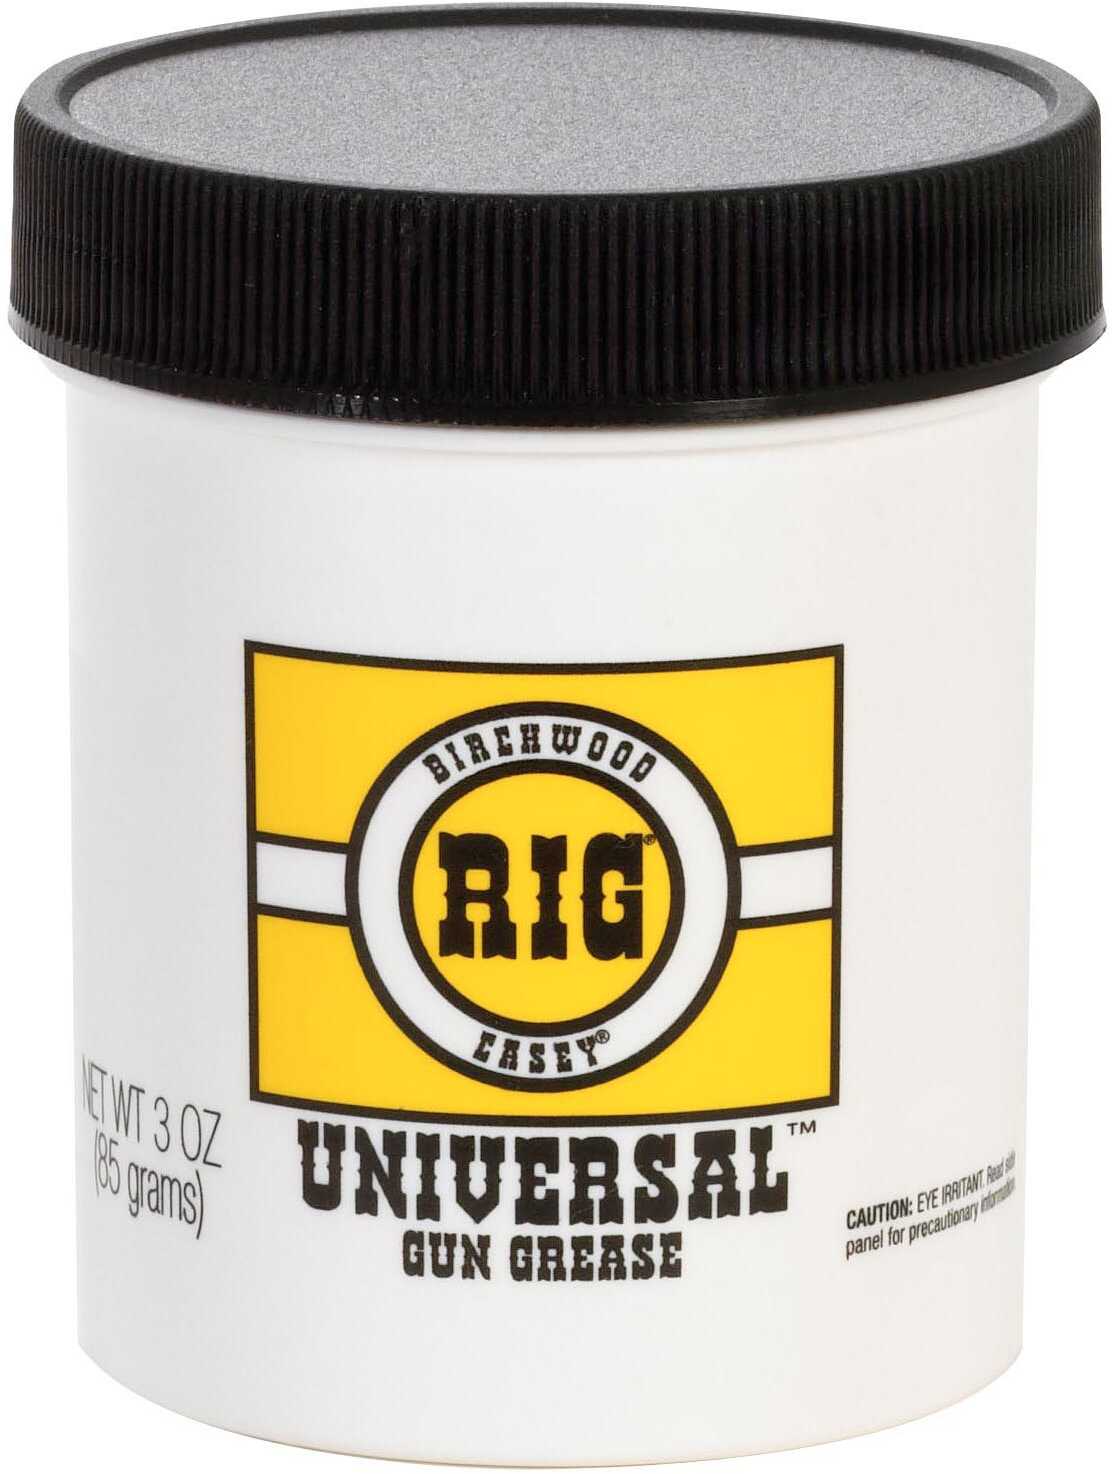 Birchwood Casey Rug3 Rig Universal Grease 3 Ounce Jar